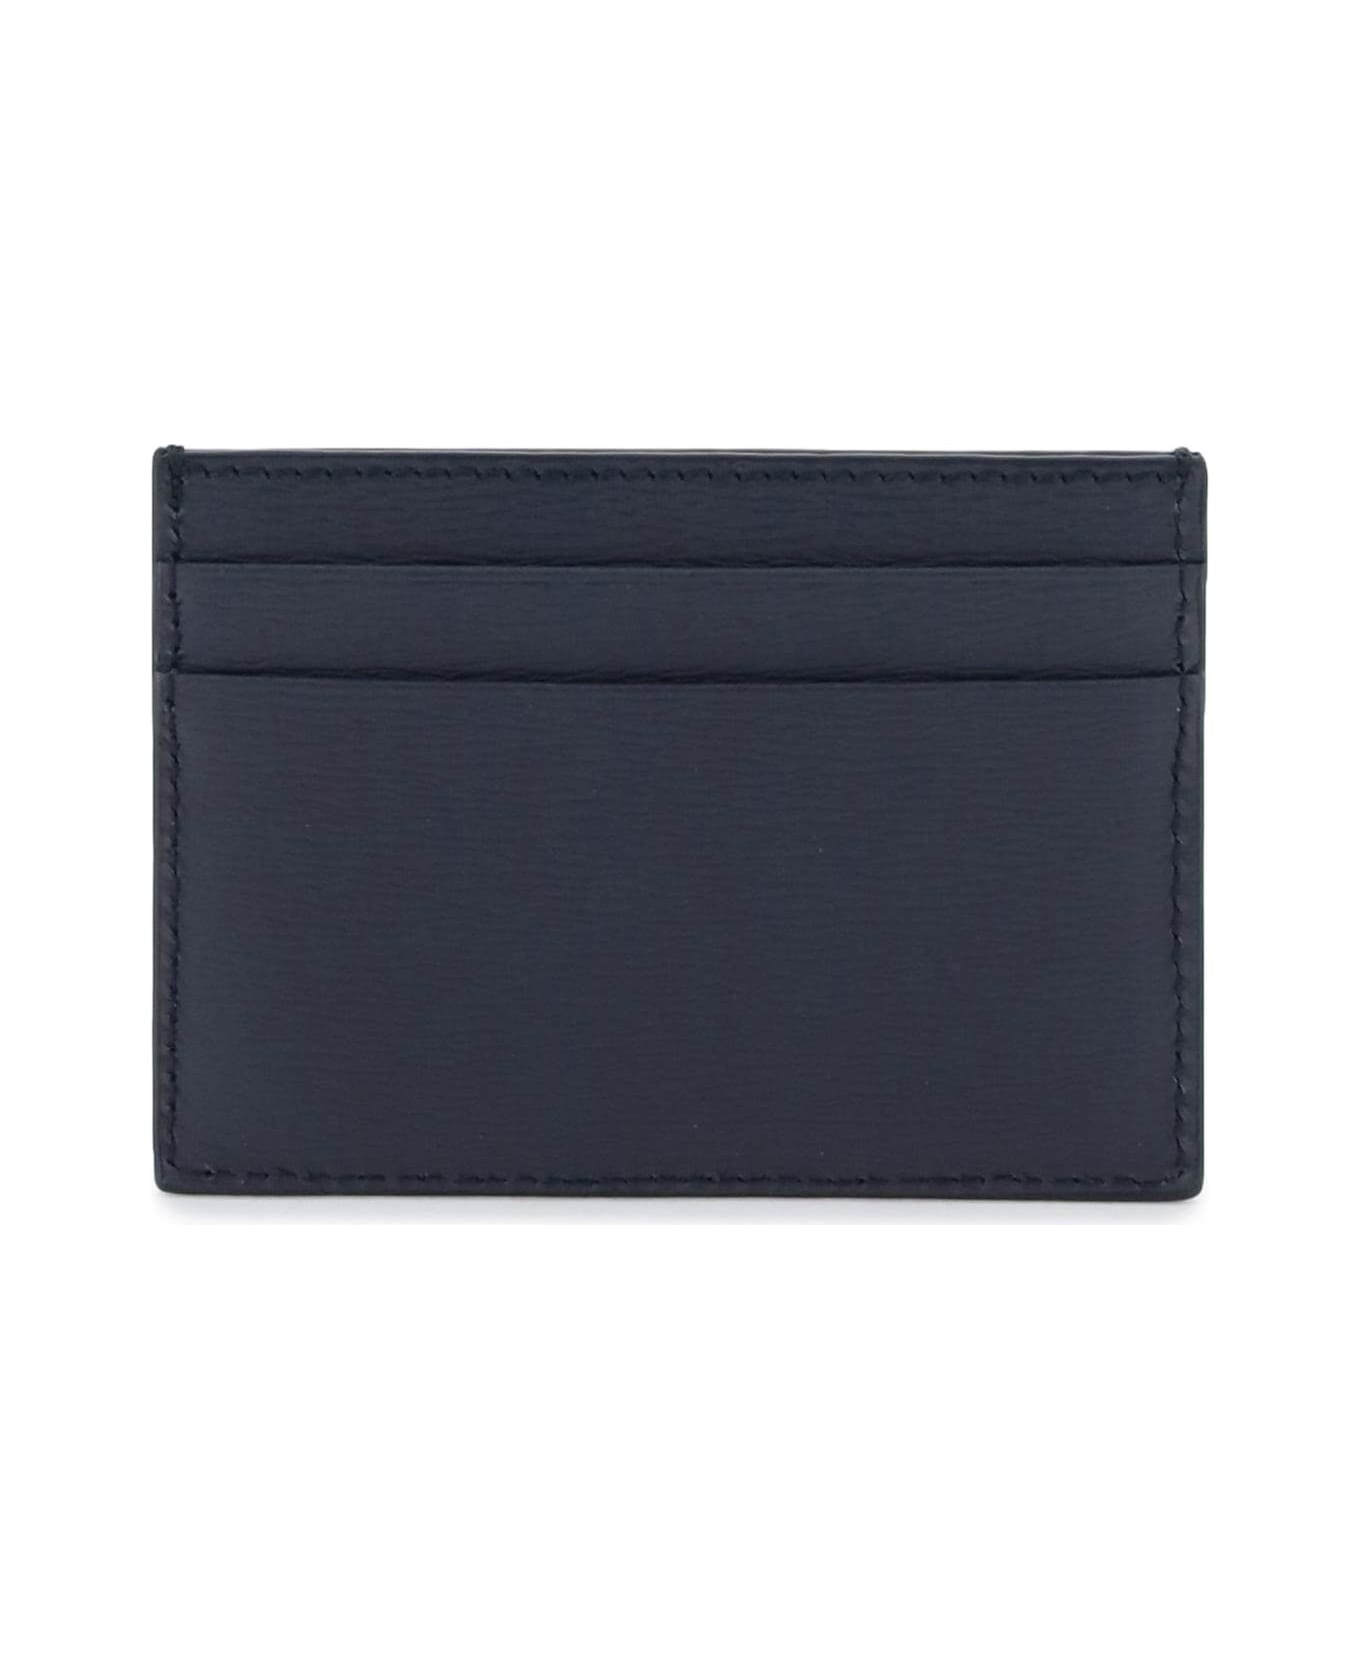 Bally Leather Crossing Cardholder - MIDNIGHT21 PALLADIO (Blue) 財布